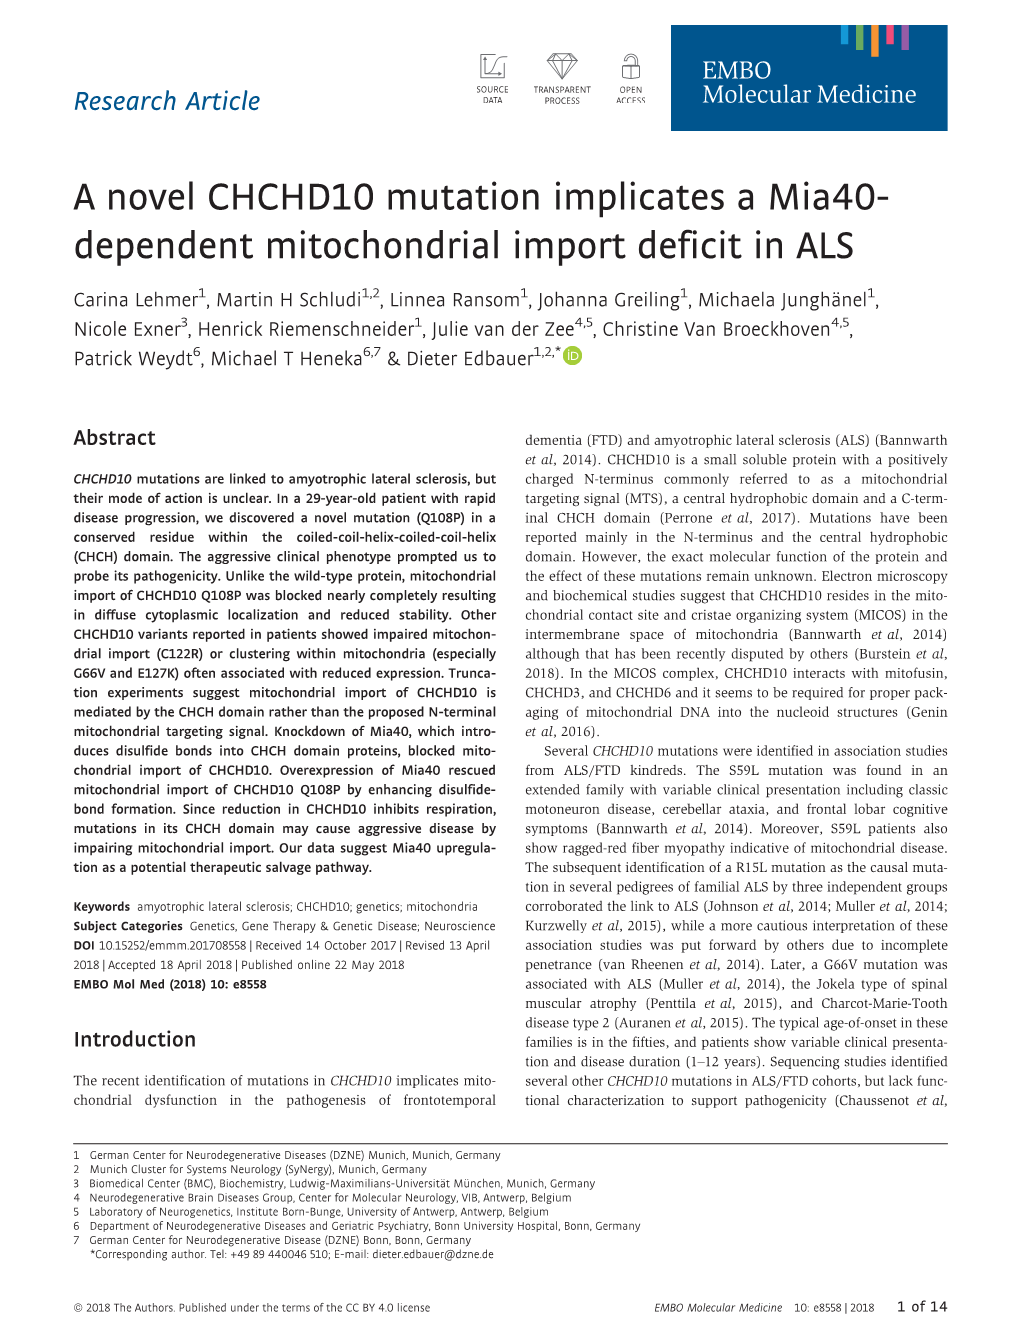 A Novel CHCHD10 Mutation Implicates a Mia40‐Dependent